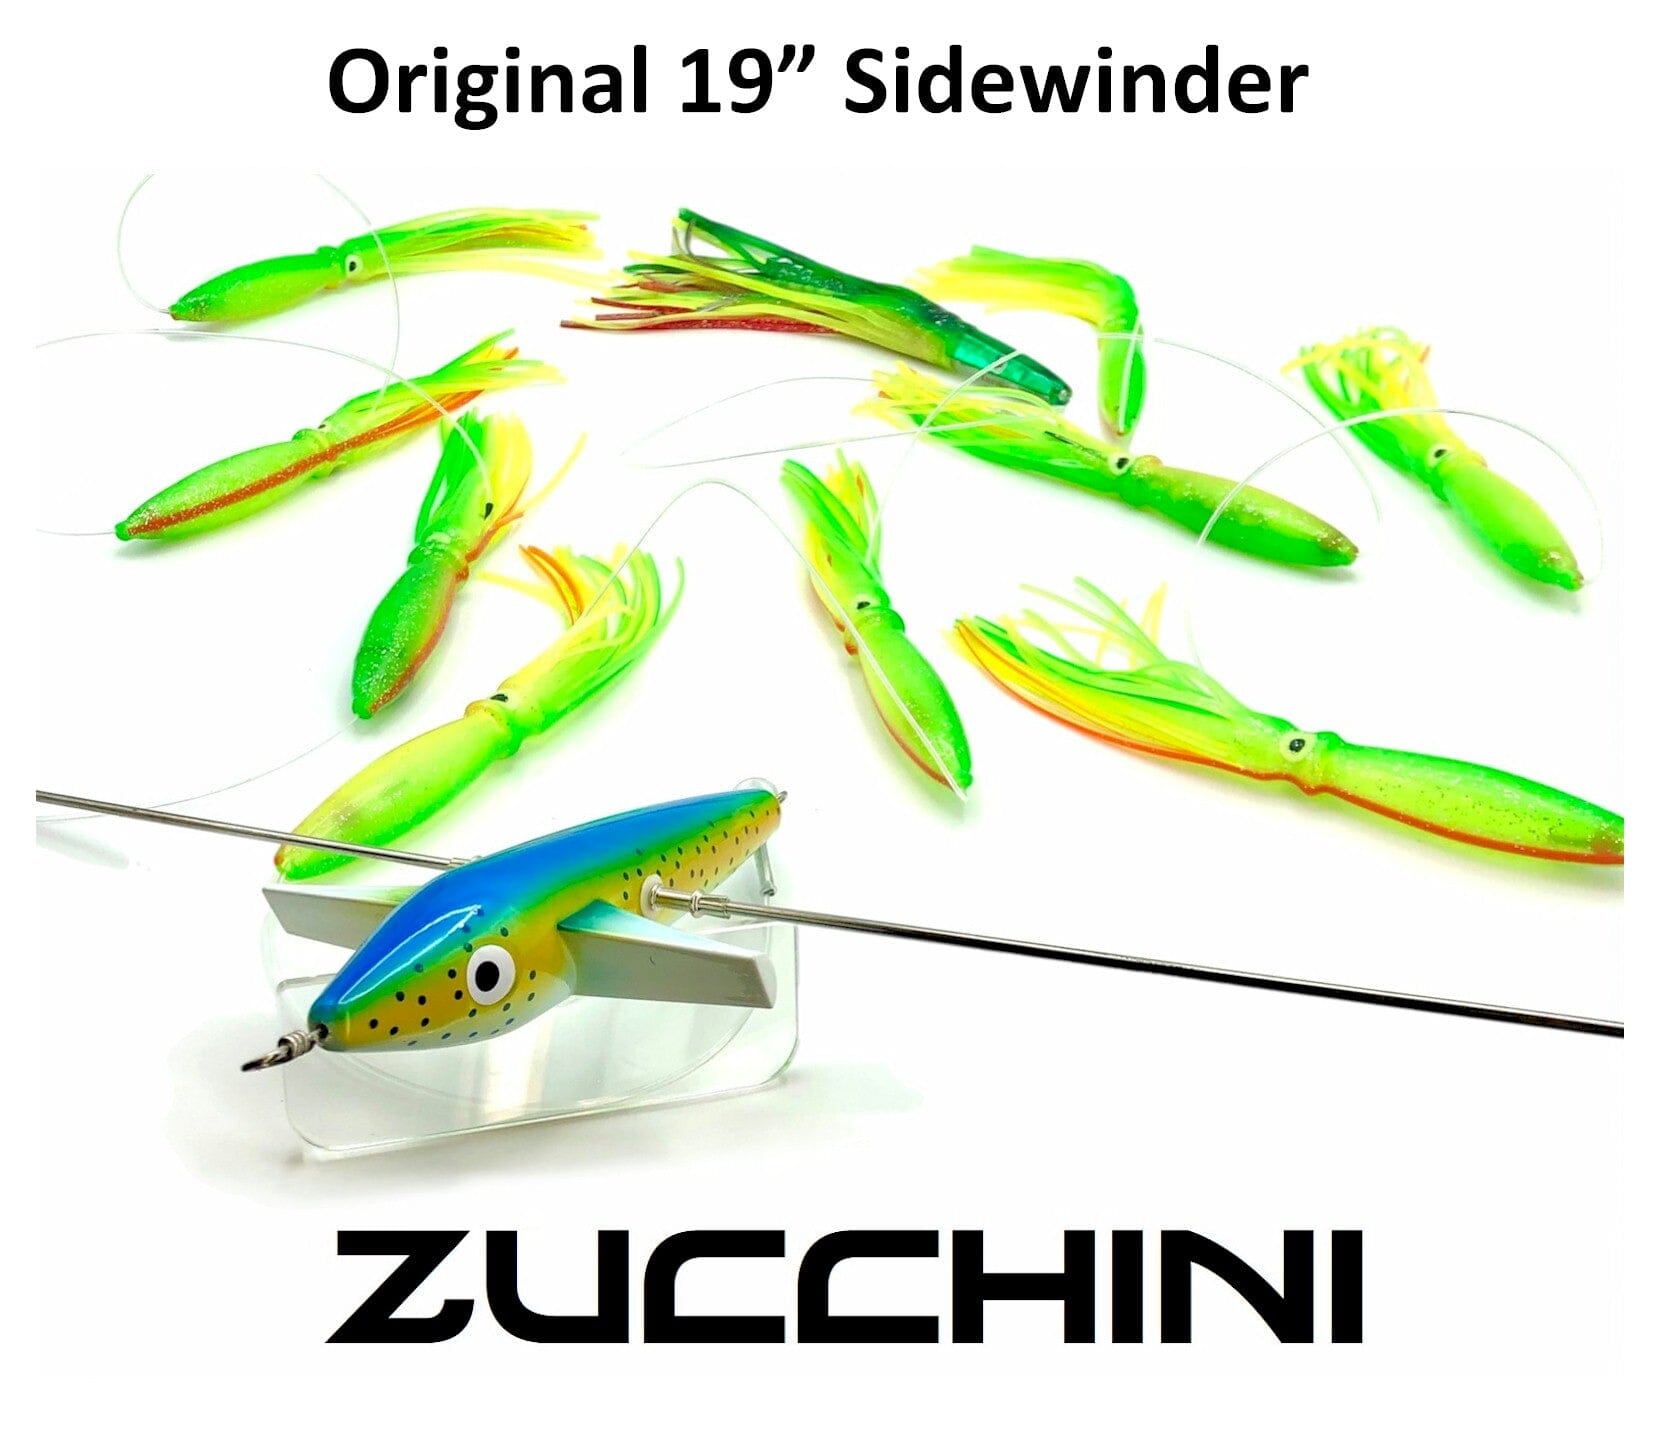 19 Sidewinder Directional Bar - Original